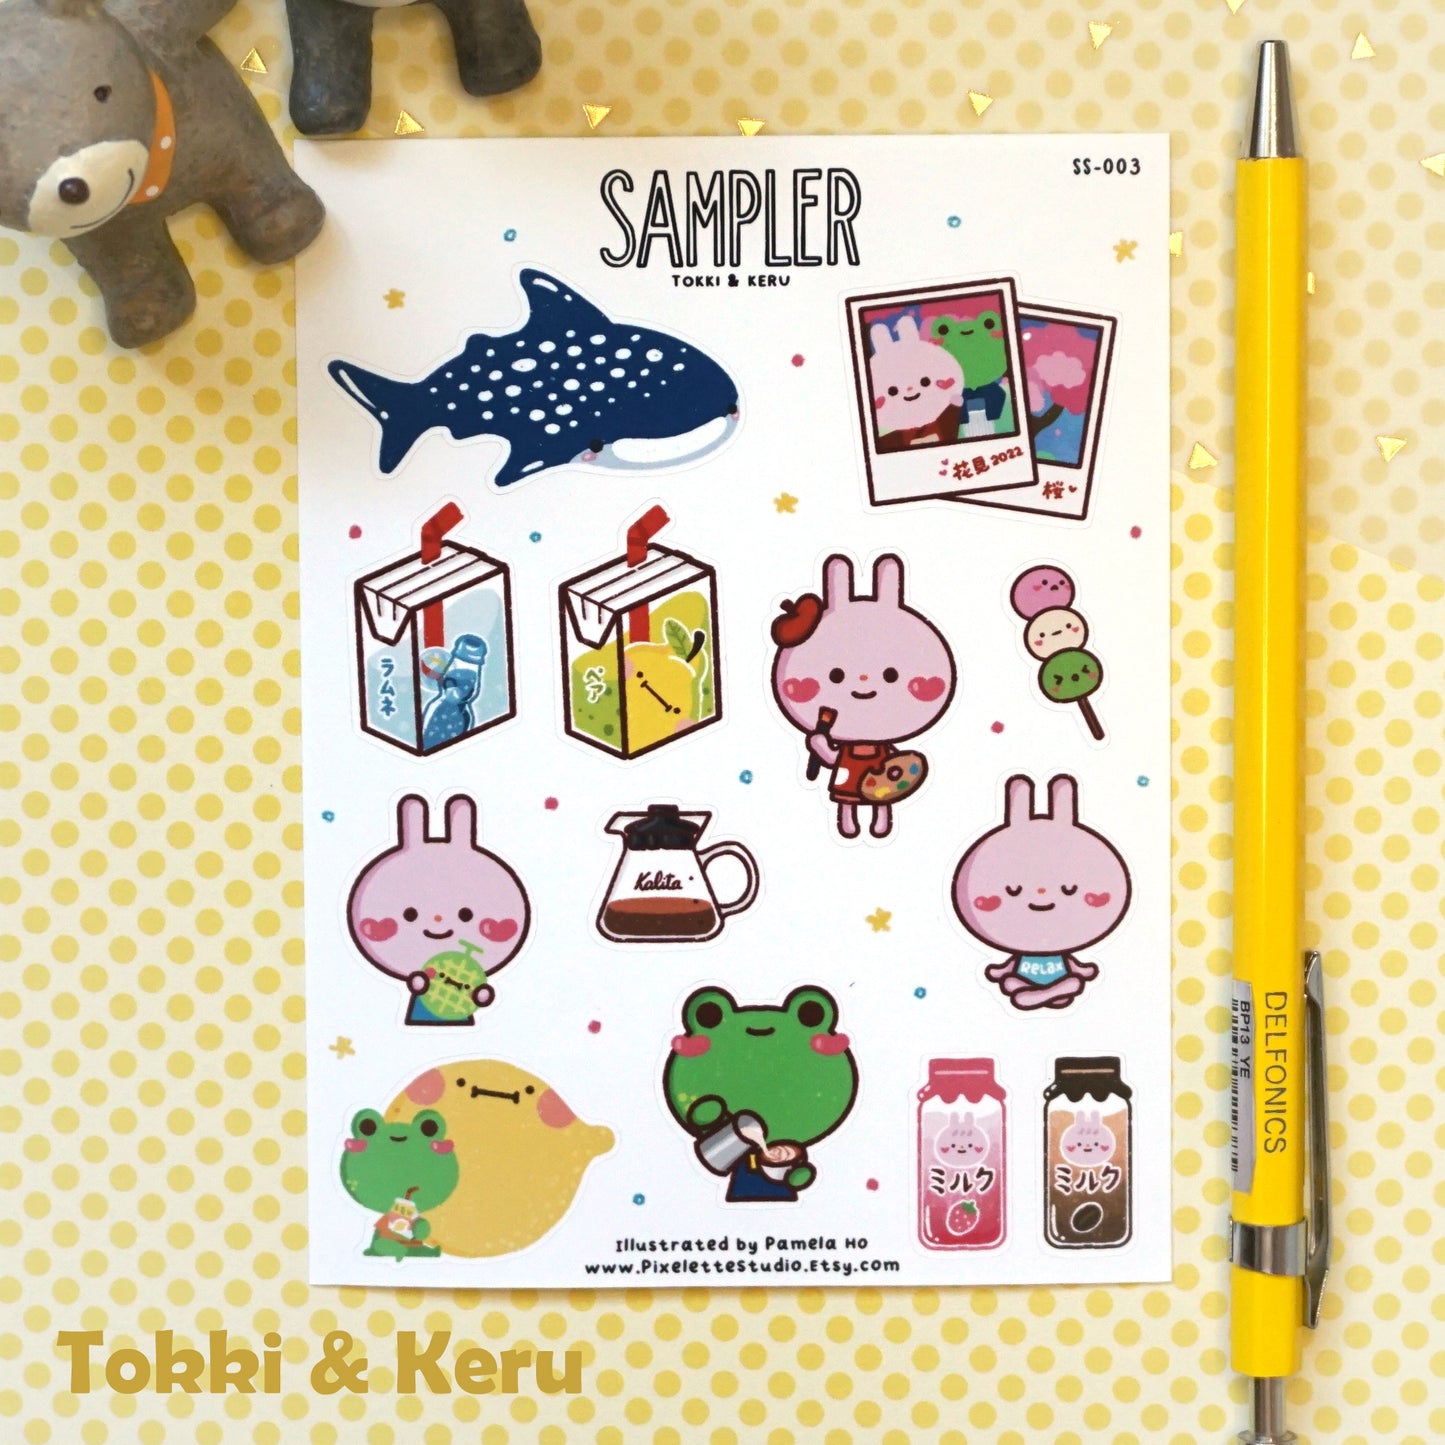 Tokki & Keru Sampler Sticker Sheet